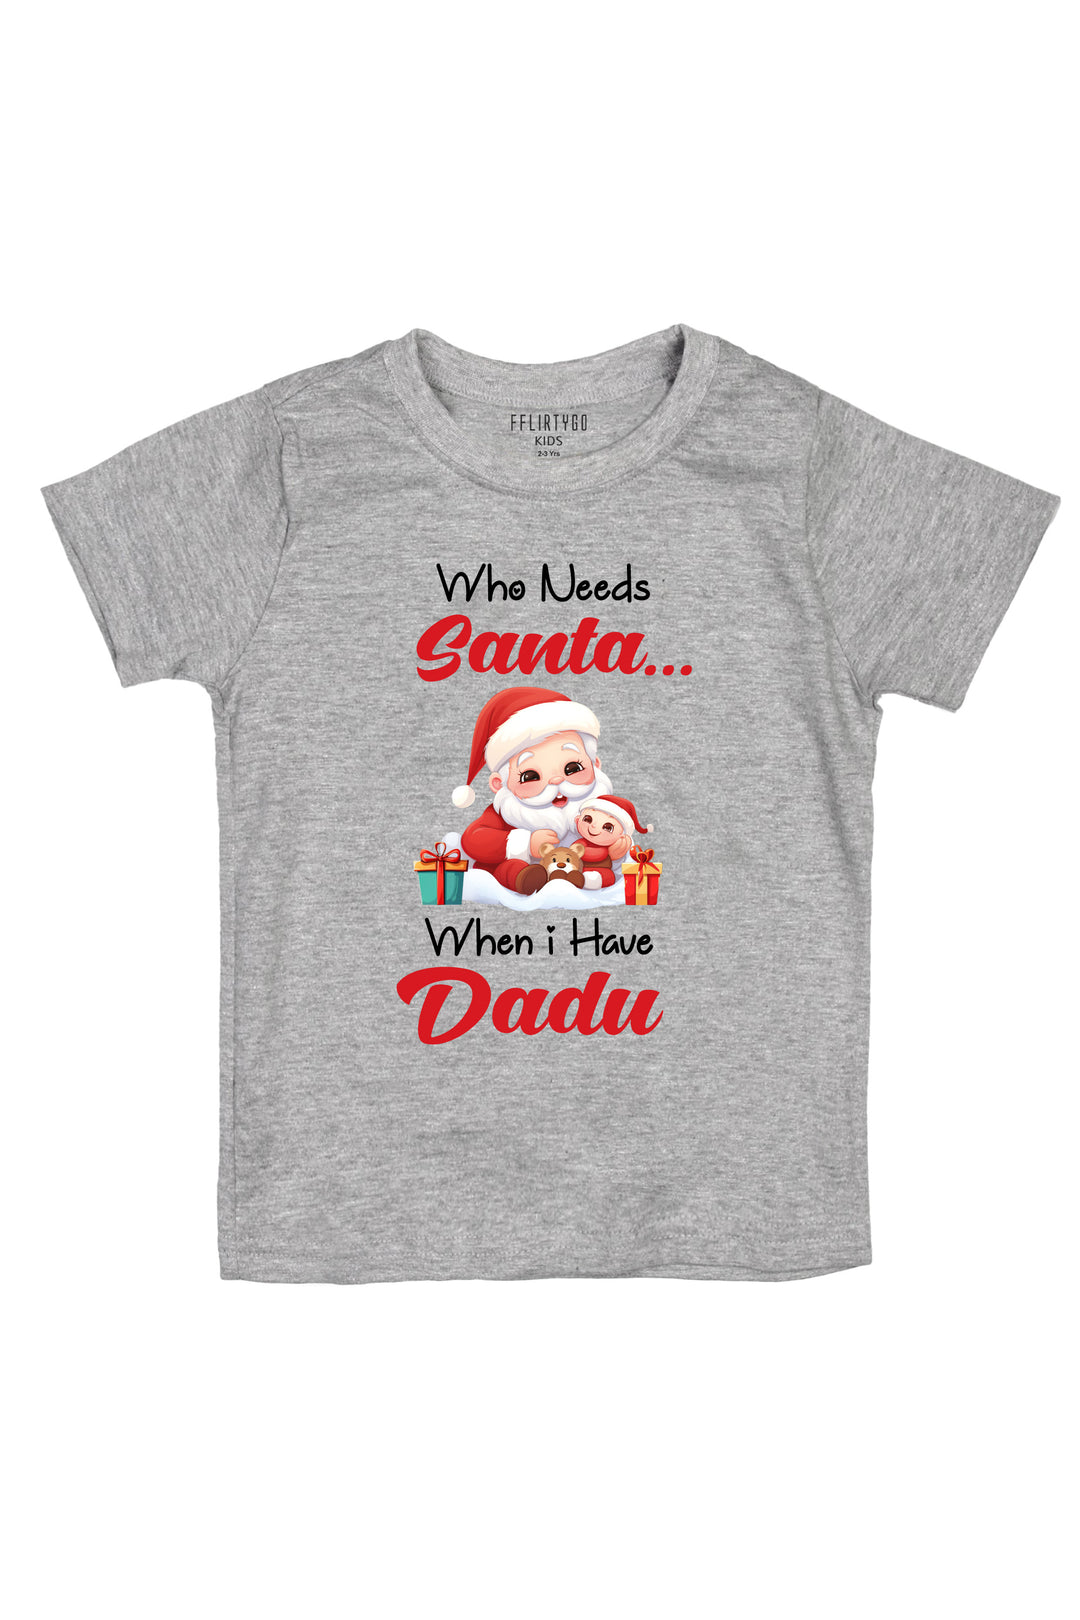 Who needs Santa When I have Dadu Kids T Shirt